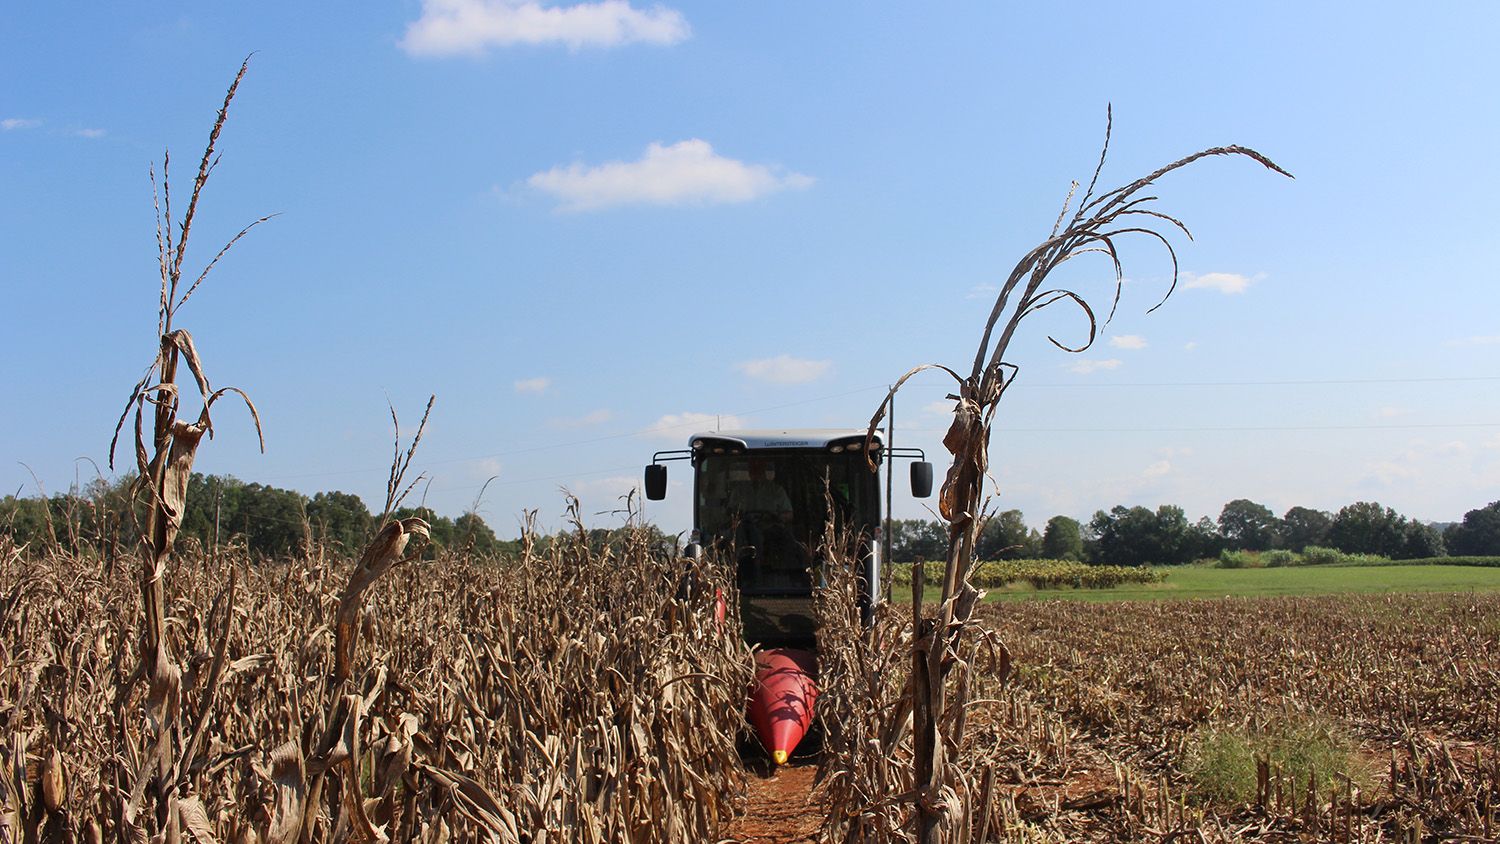 Small combine harvesting corn